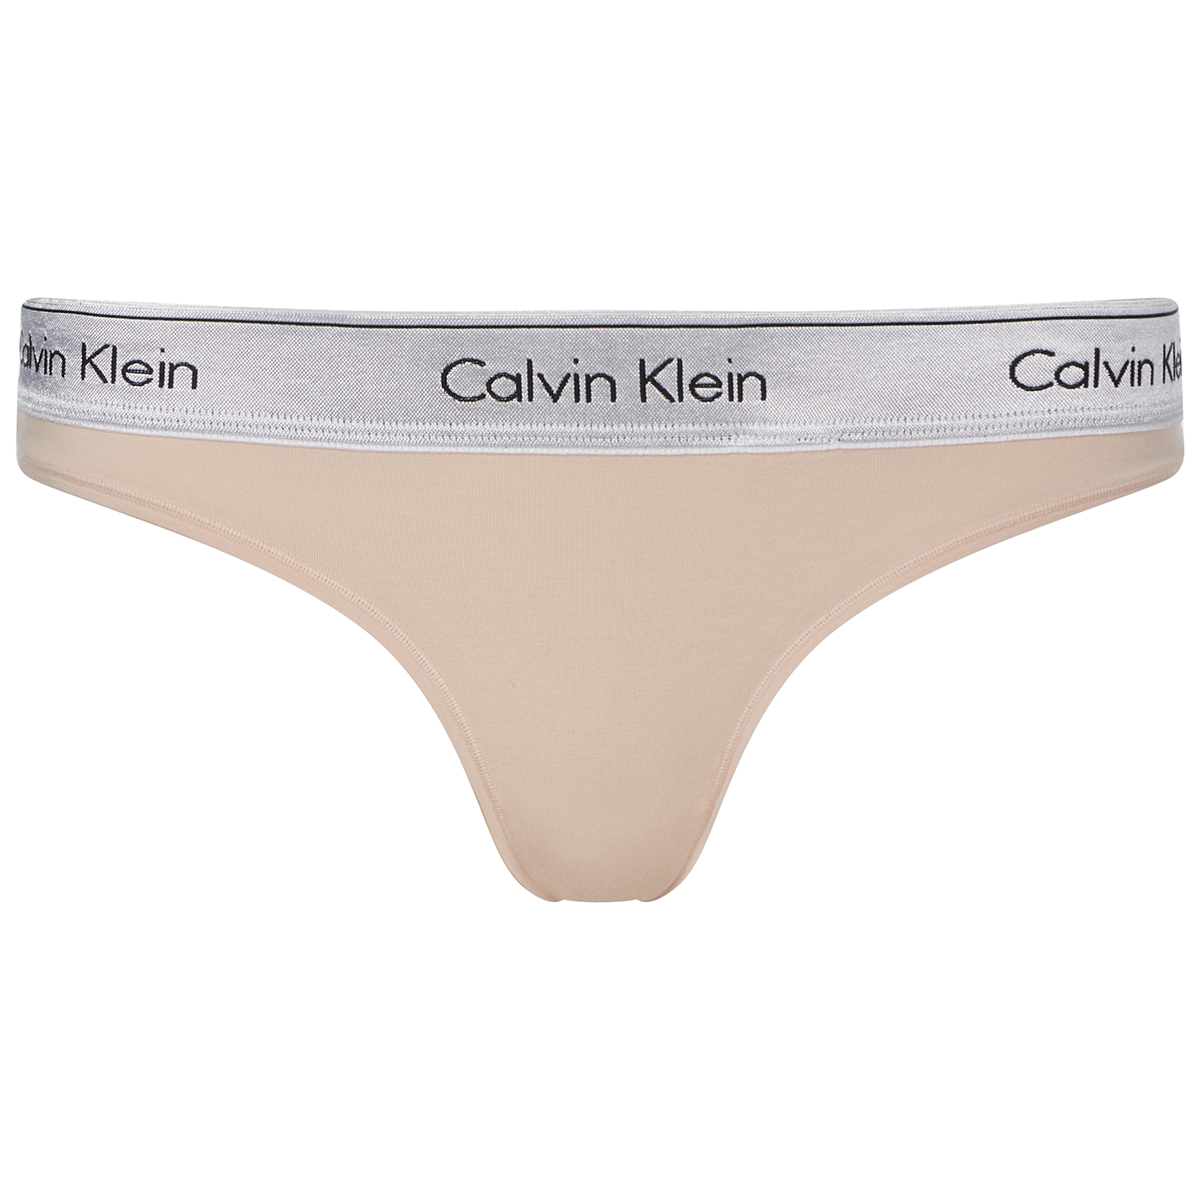 Calvin Klein G-streng, Farve: Buff Beige Sølv, Størrelse: XL, Dame